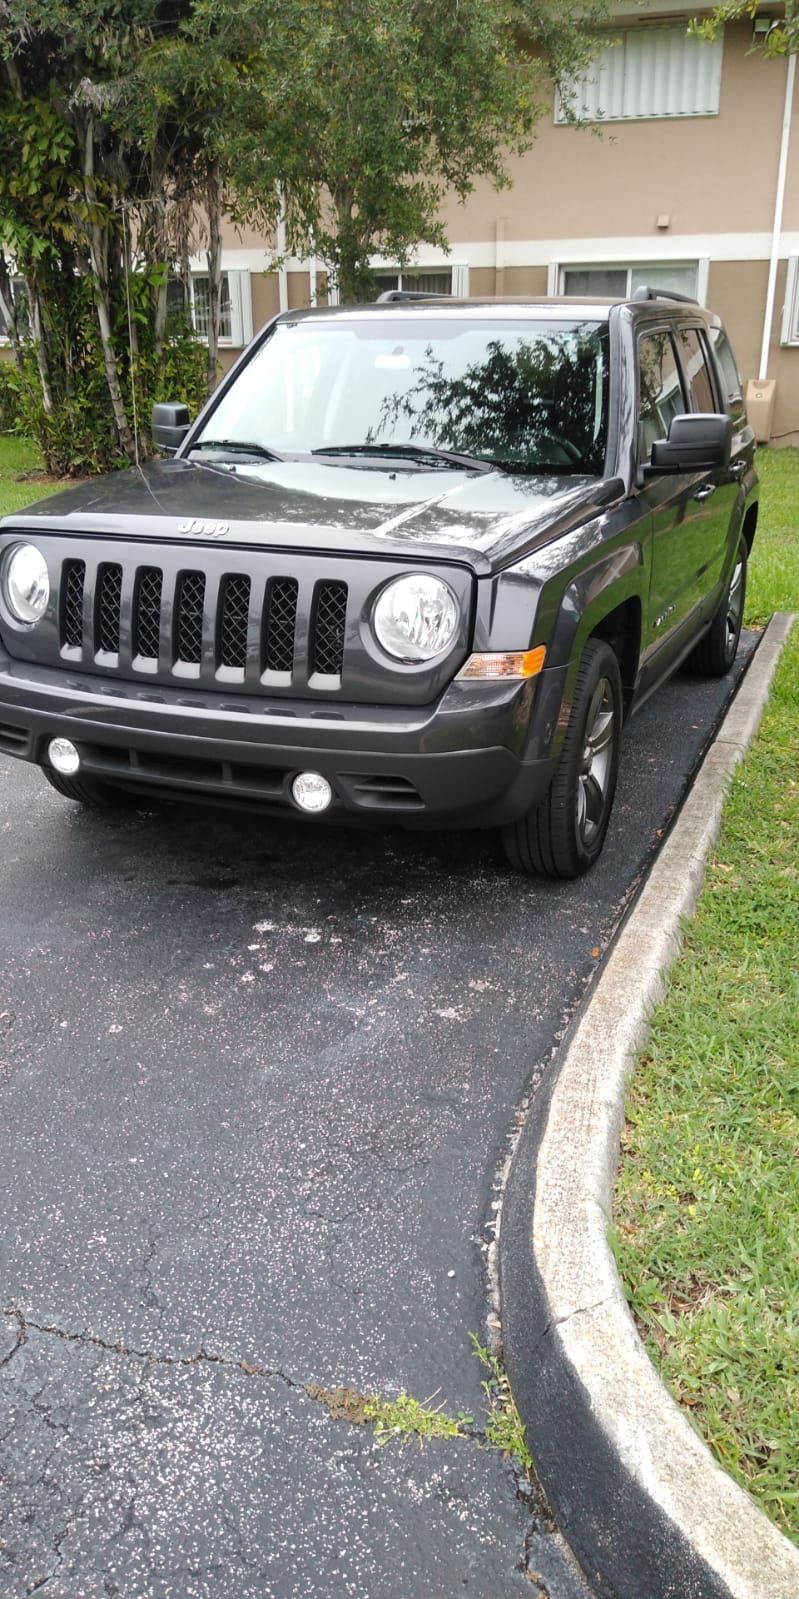 2014 Jeep Patriot